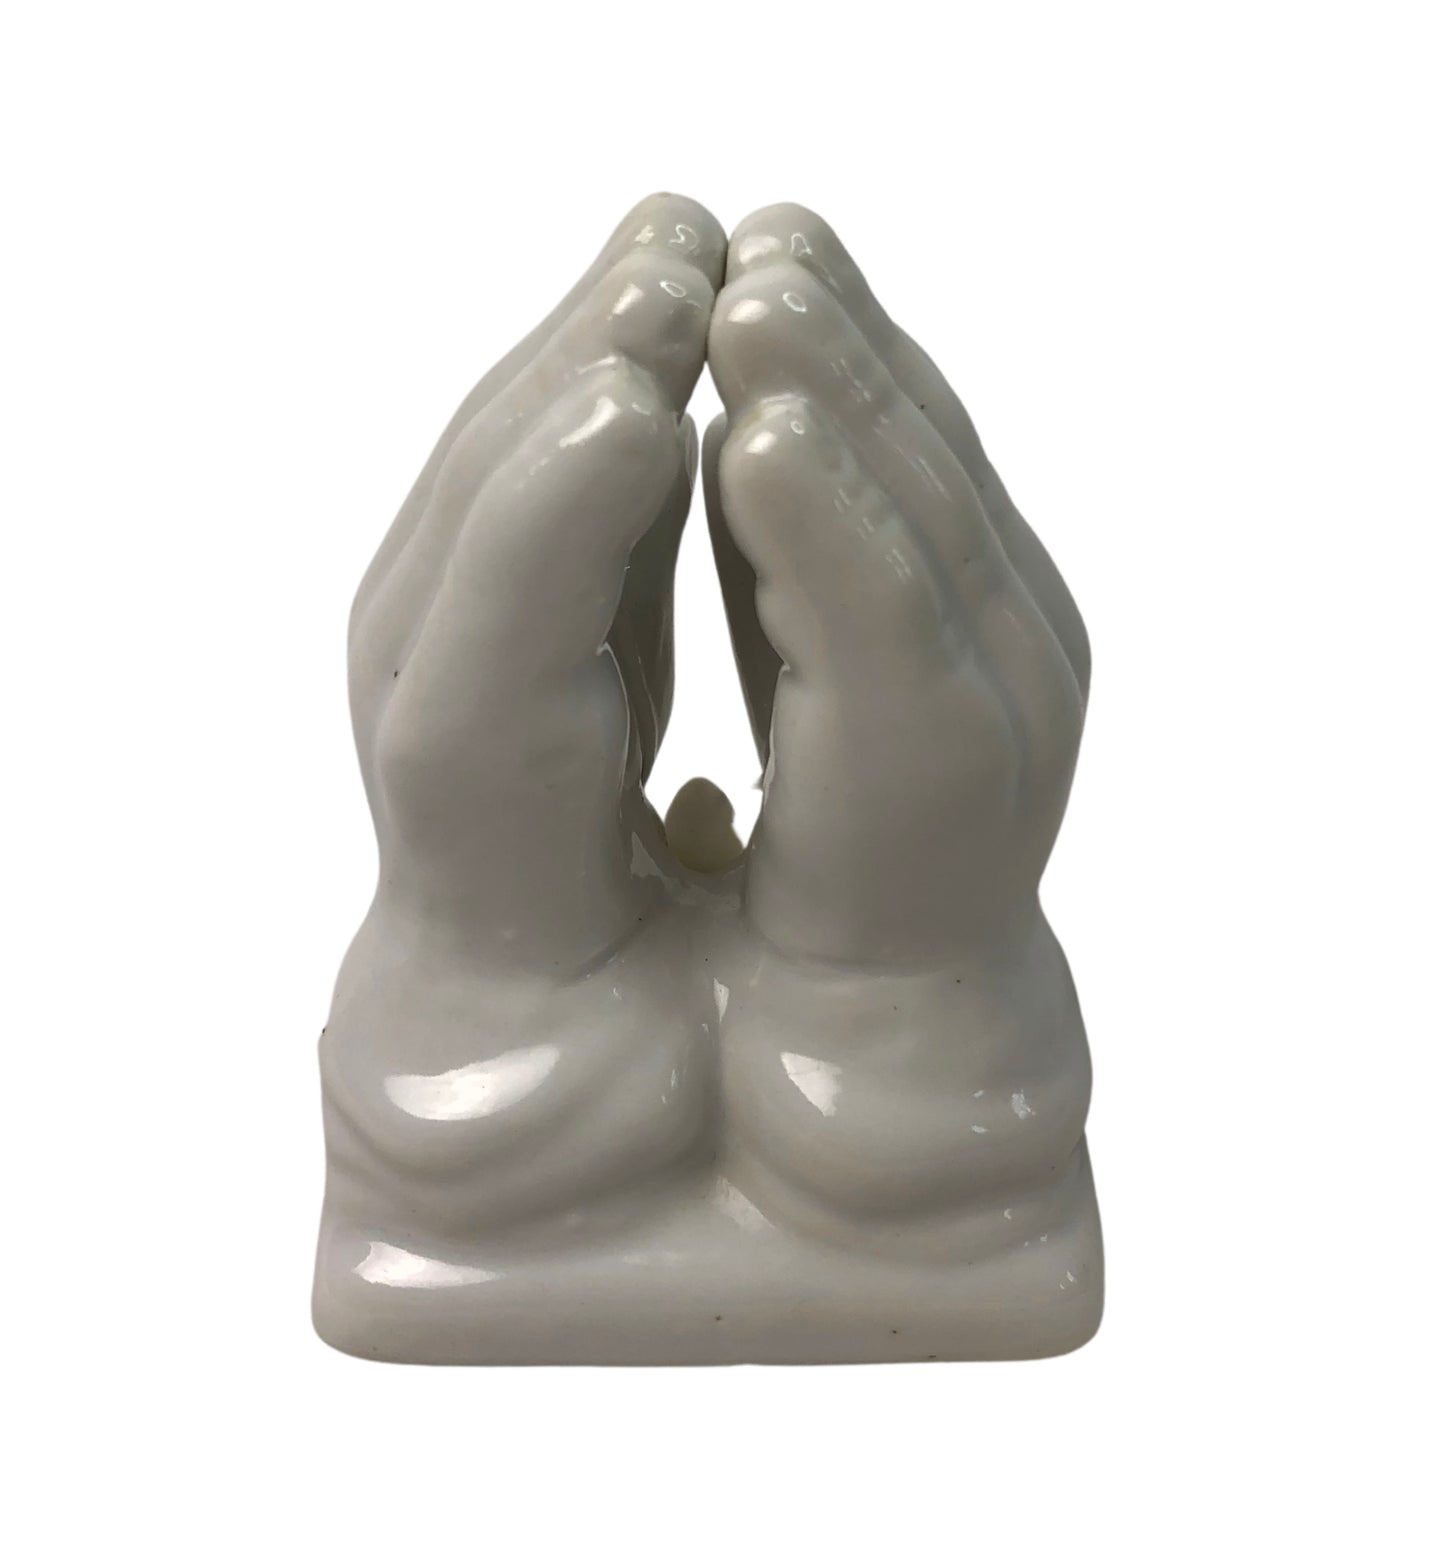 Vintage Porcelain Prayer Praying Hands Religious Figurine Statue